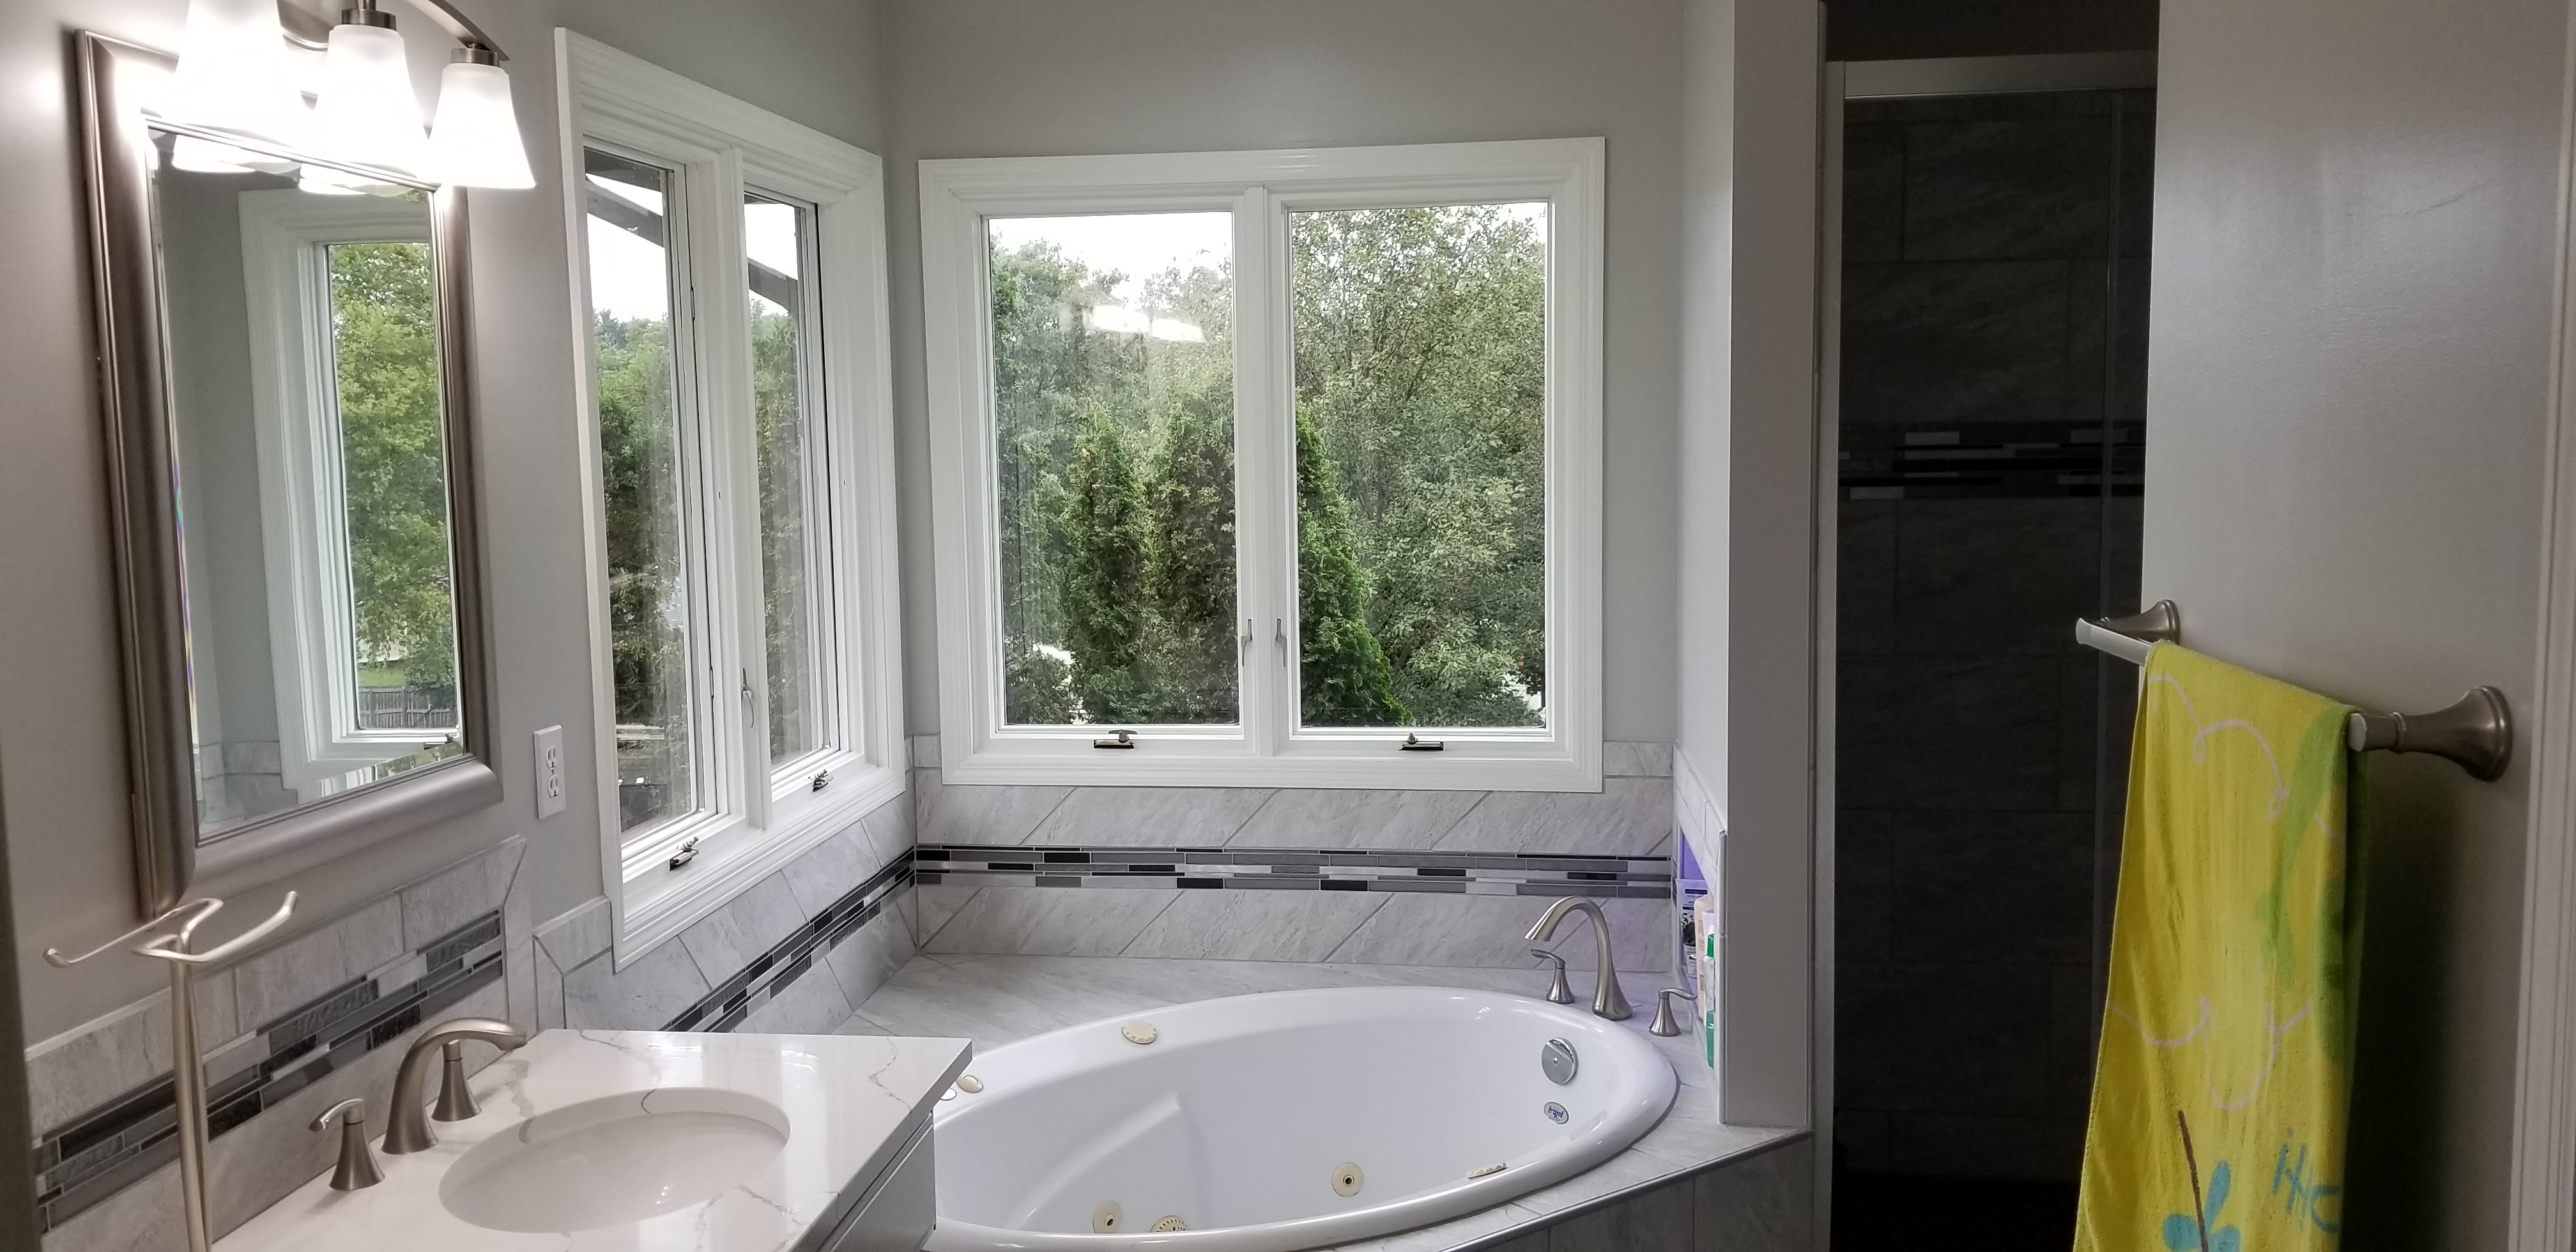 Bathtub with two windows with white trim